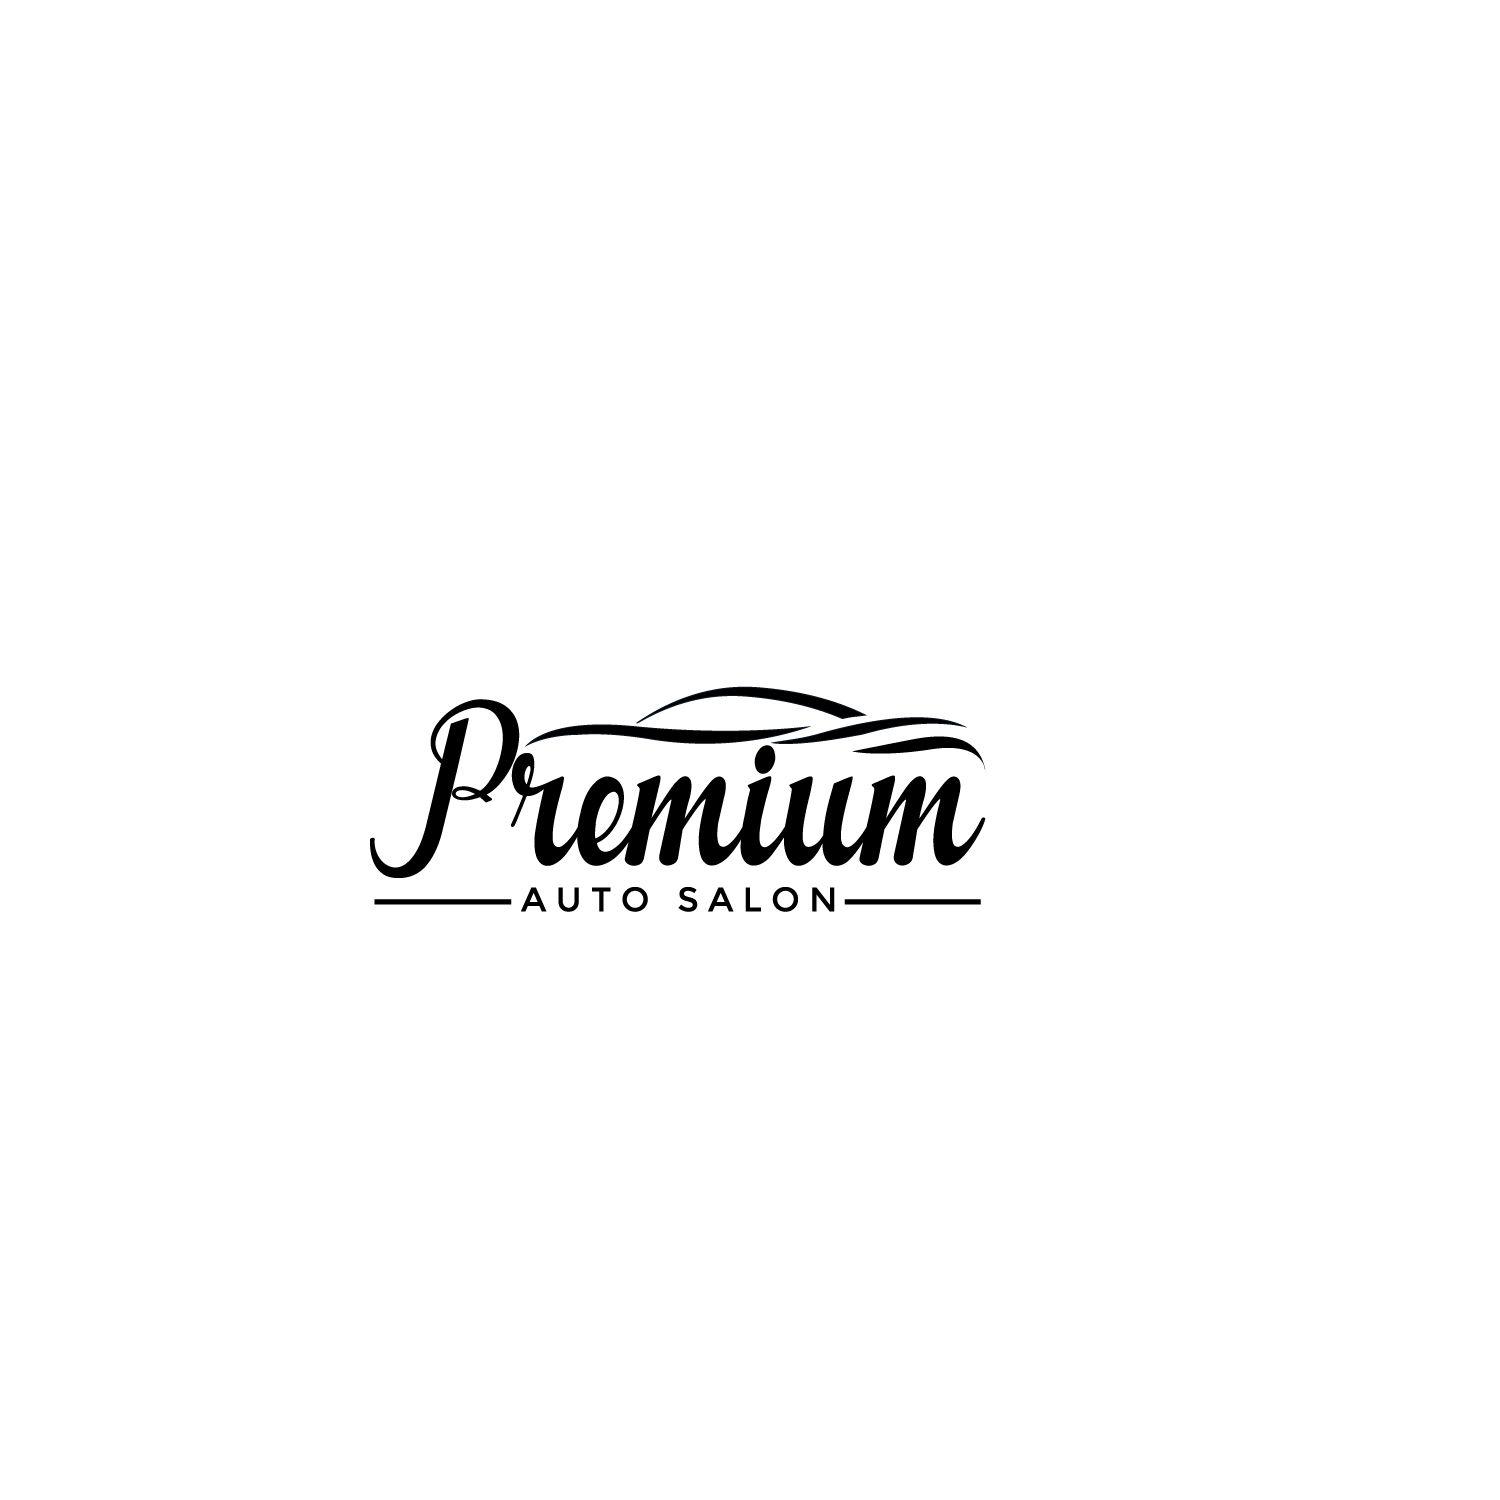 Google Automotive Logo - Elegant, Playful, Automotive Logo Design for Premium Auto Salon by ...